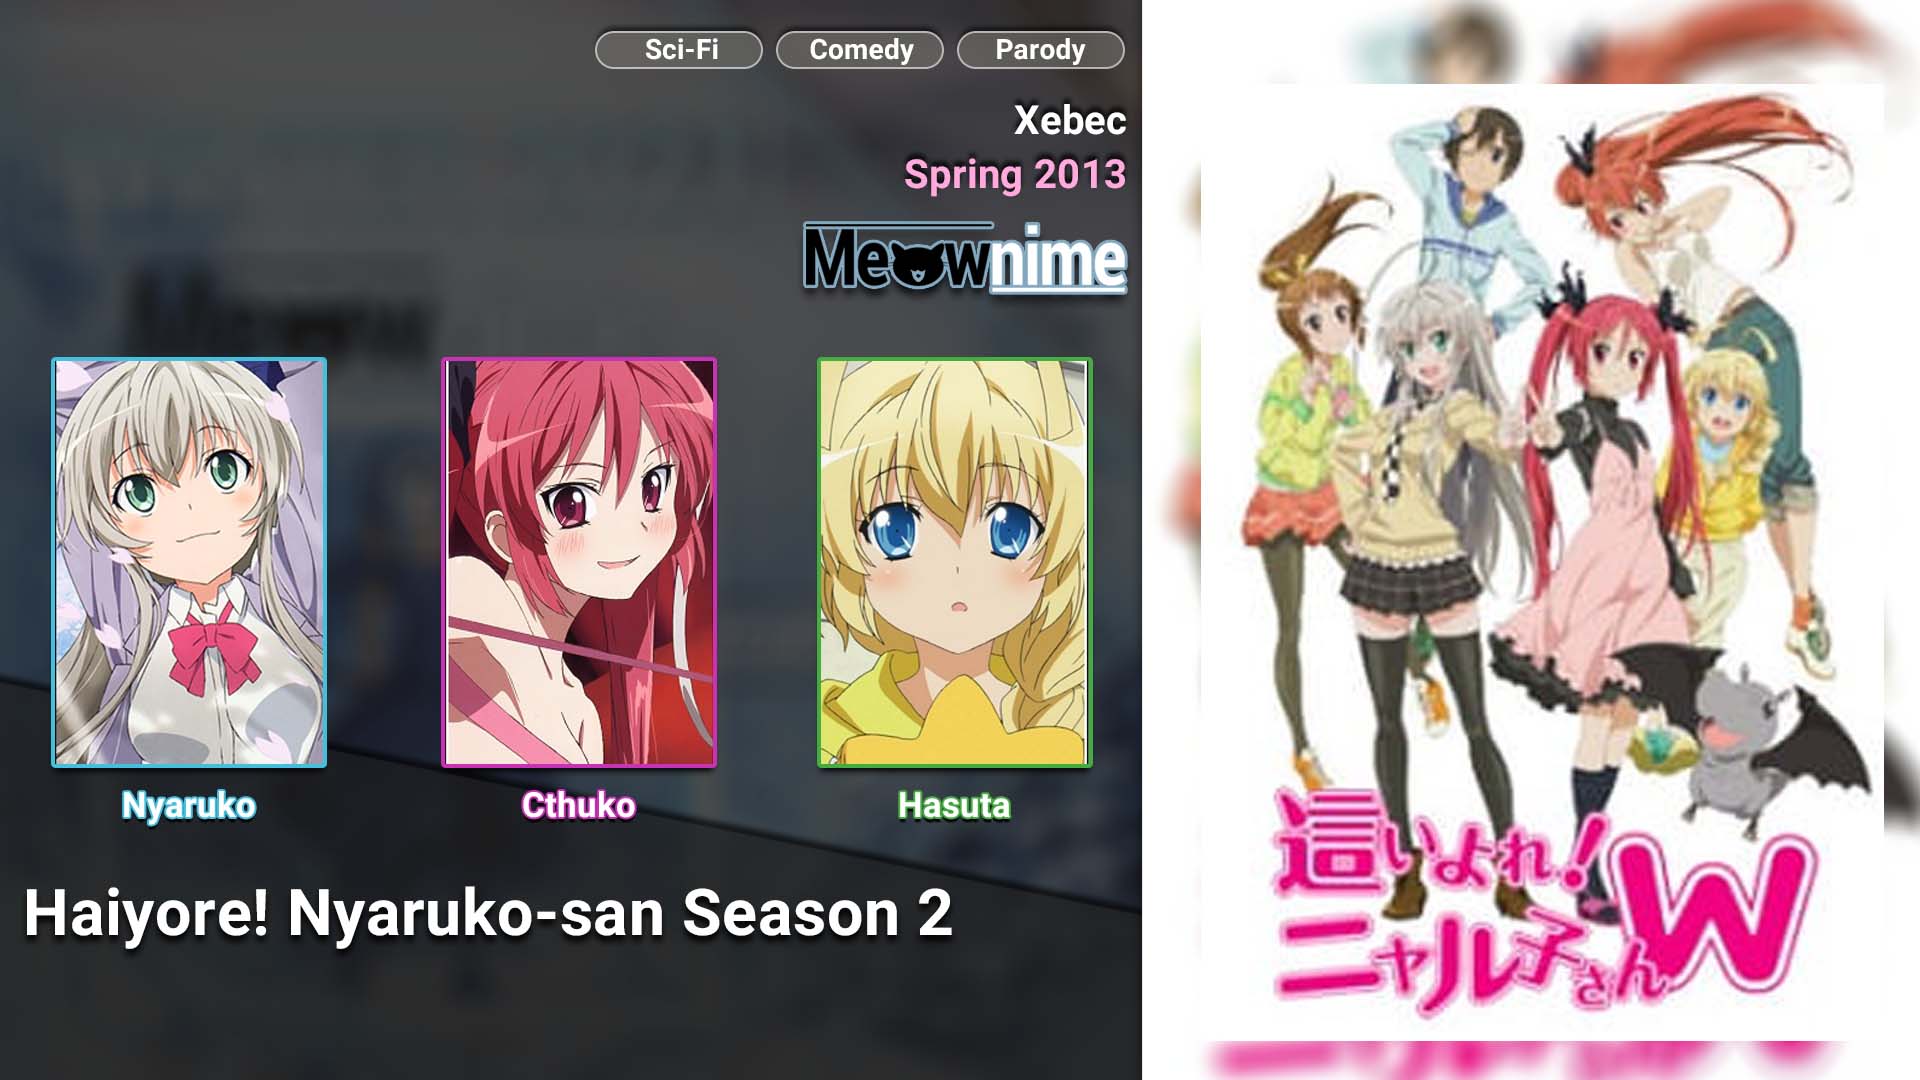 Haiyore! Nyaruko-san Season 2